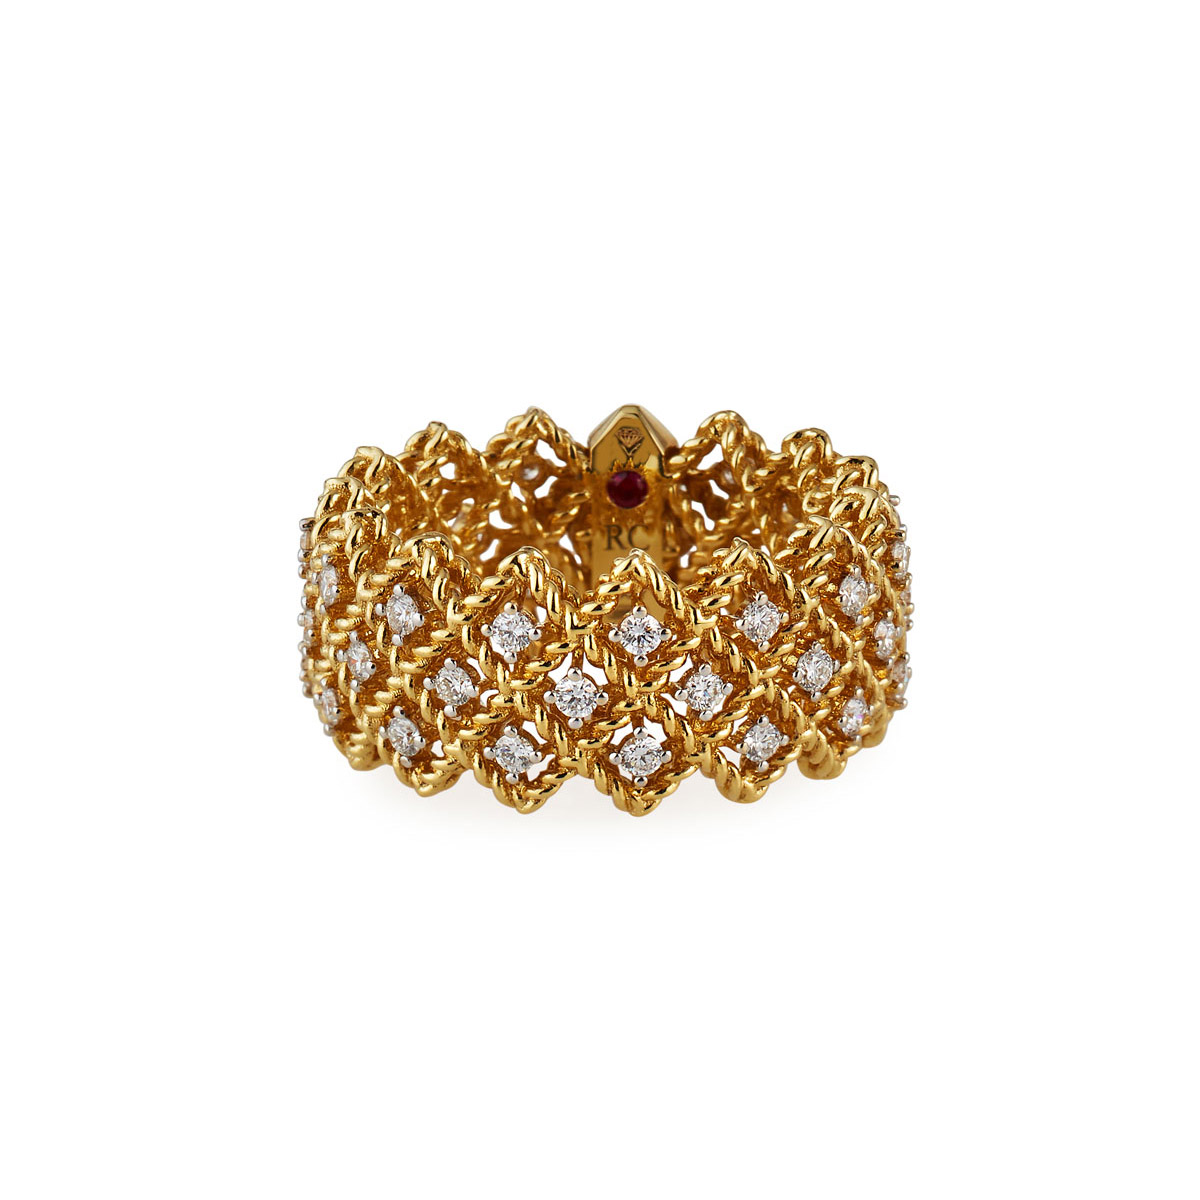 Wholesale OEM/ODM Jewelry Custom Three-Row Ring in 18K Yellow Gold vermail silver jewelry designer